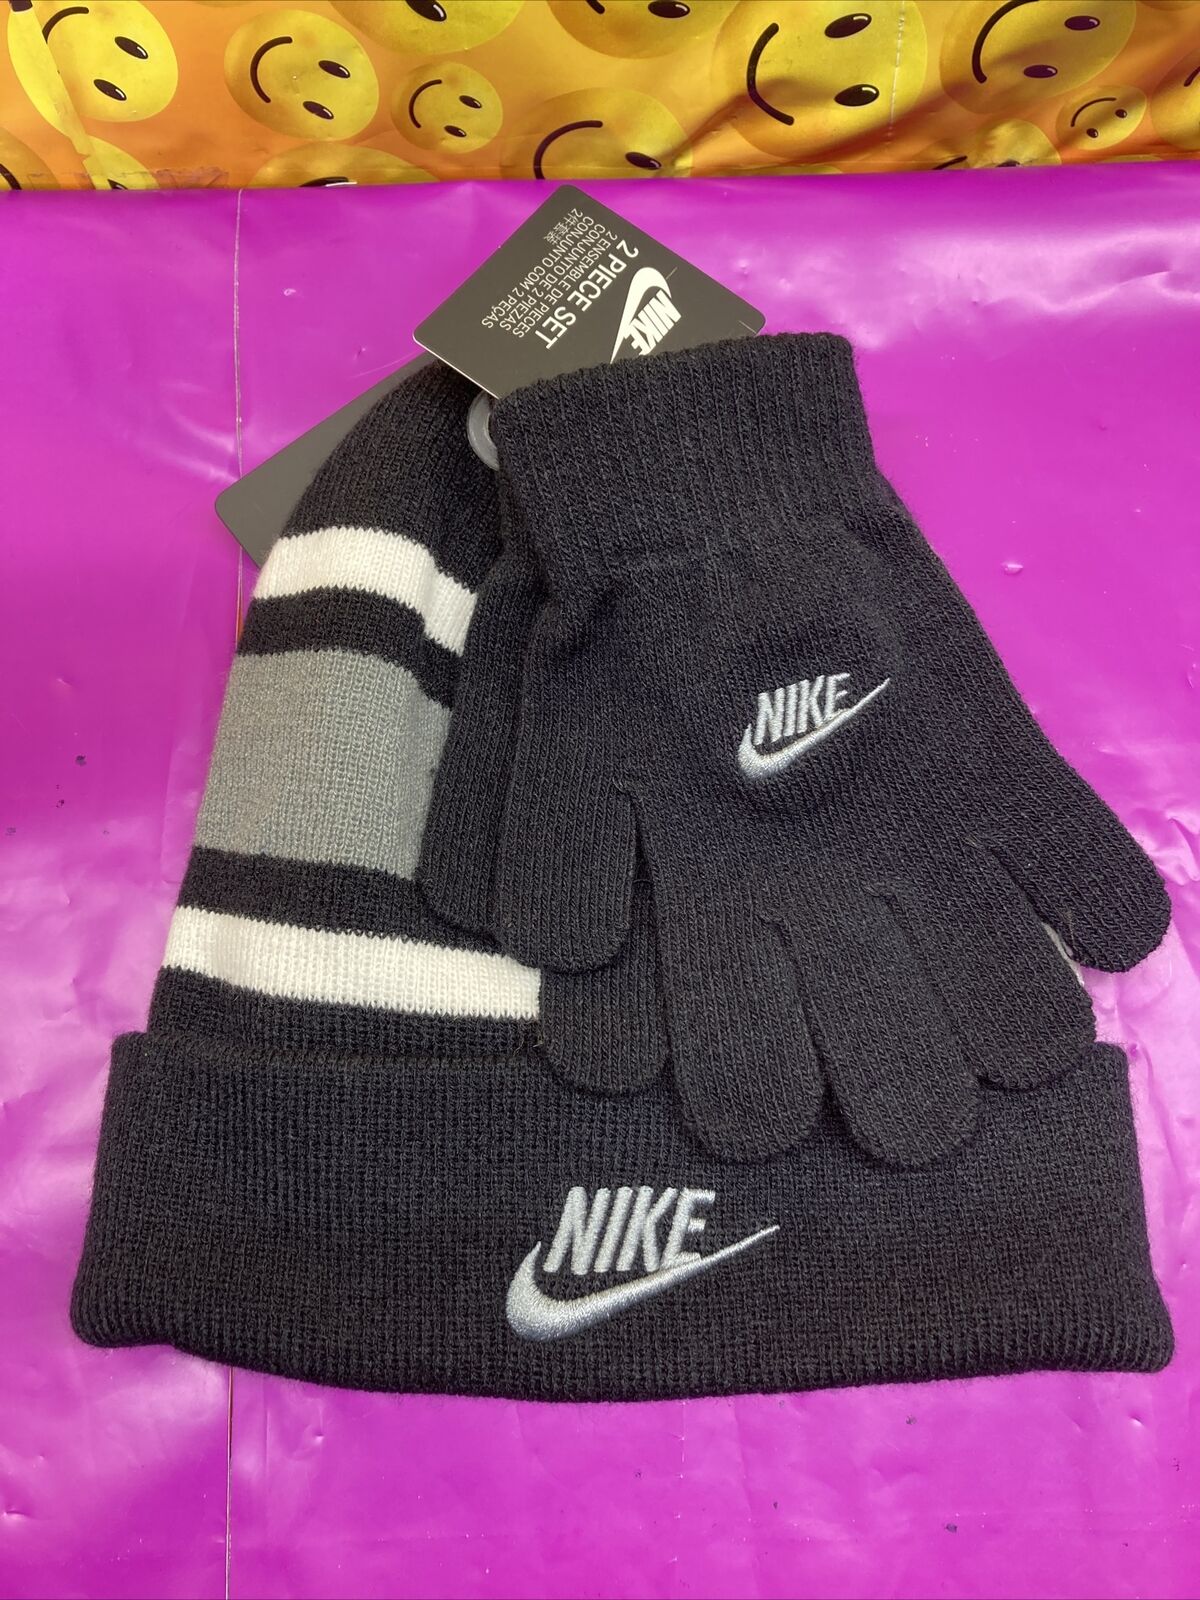 New Nike Boys Youth 2 Piece Foldover Beanie Hat & Gloves Set Gray Black White